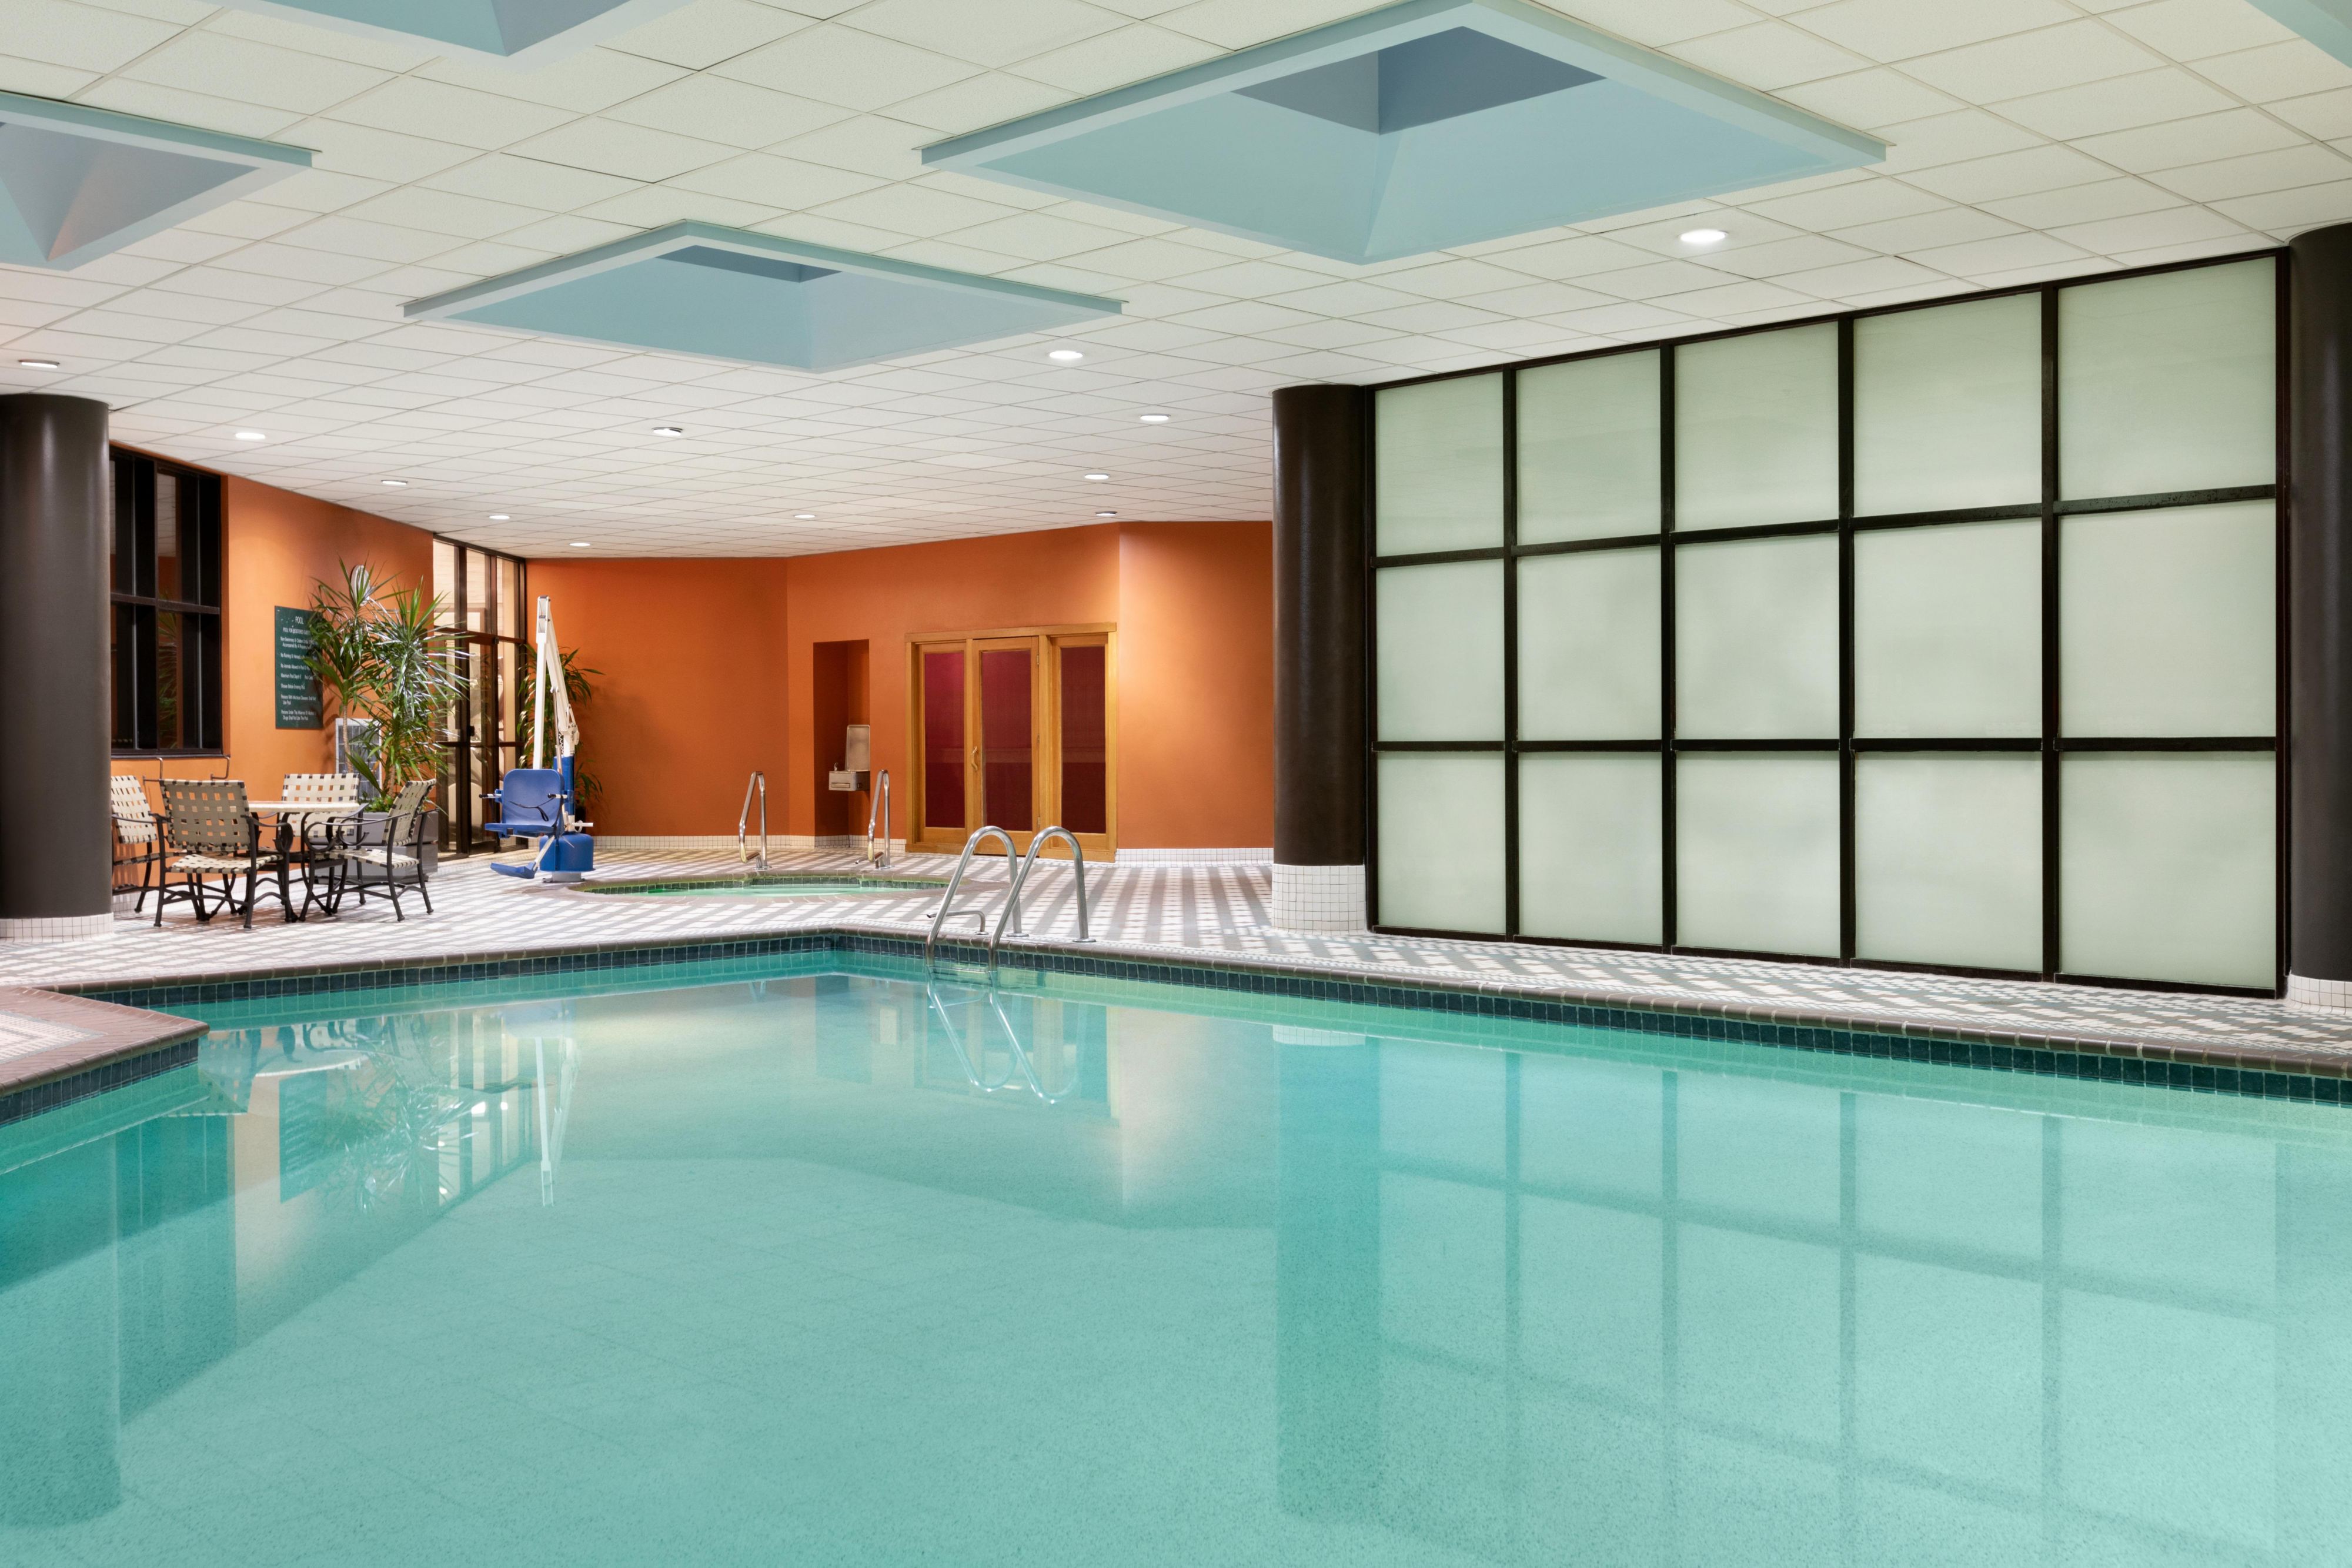 Enjoy our indoor heated pool